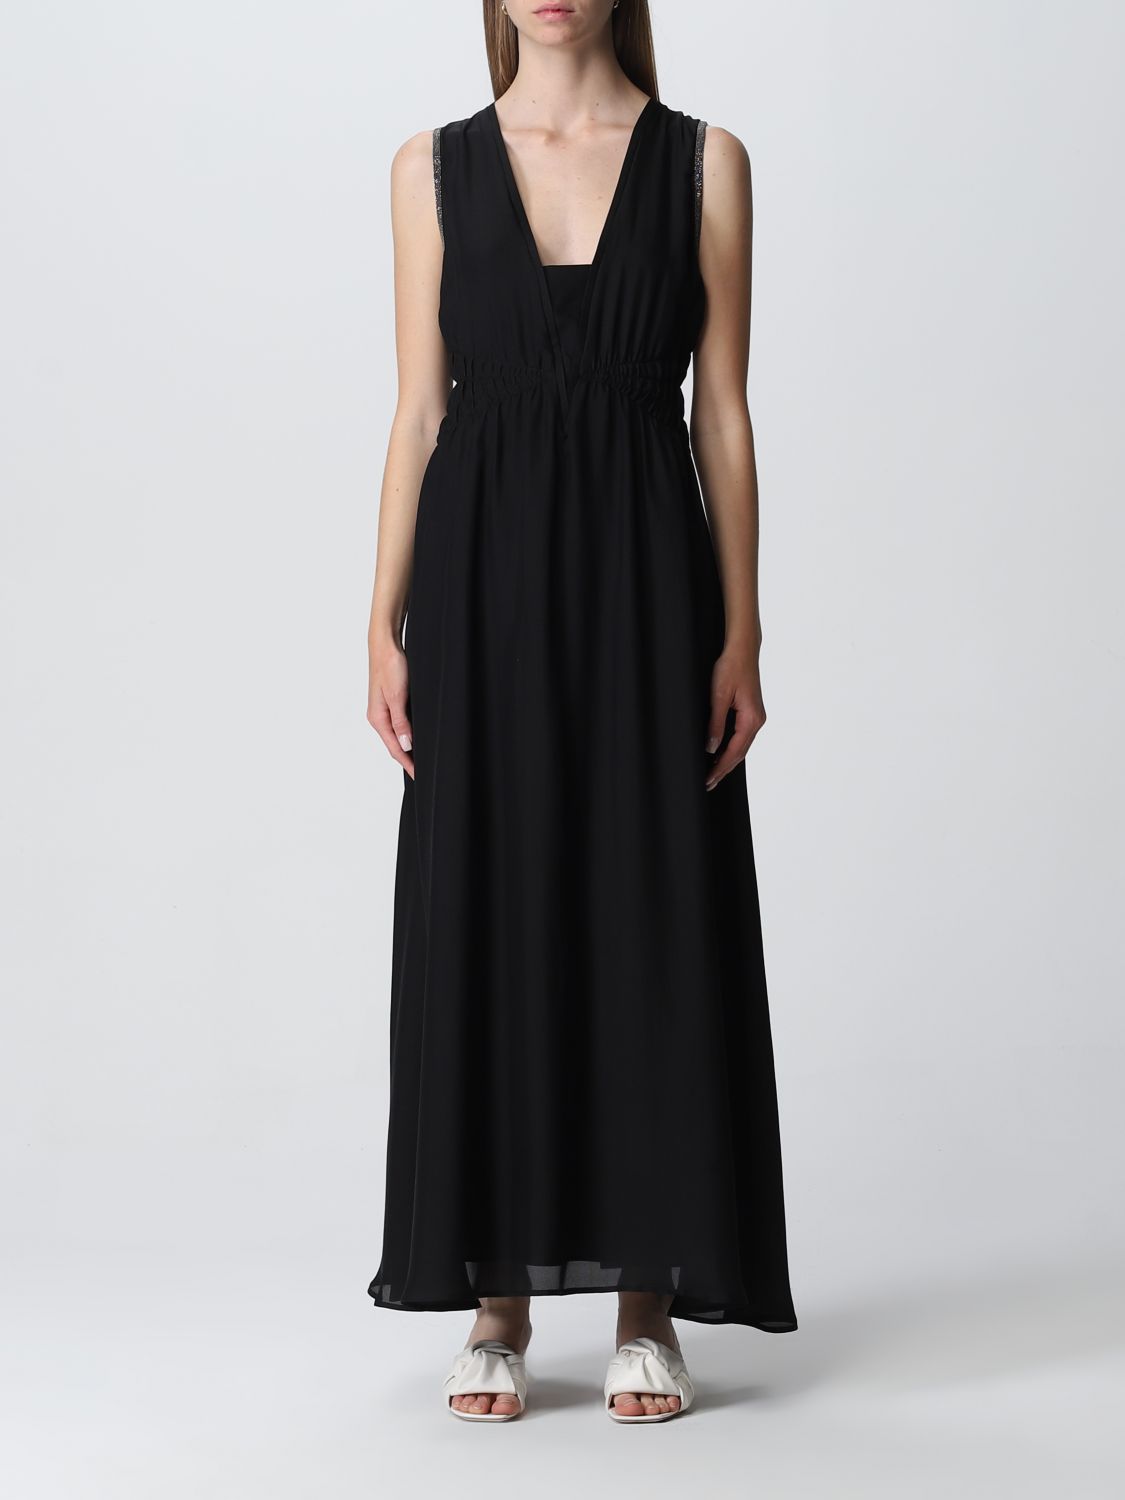 Fabiana Filippi Outlet: dress for woman - Black | Fabiana Filippi dress ...